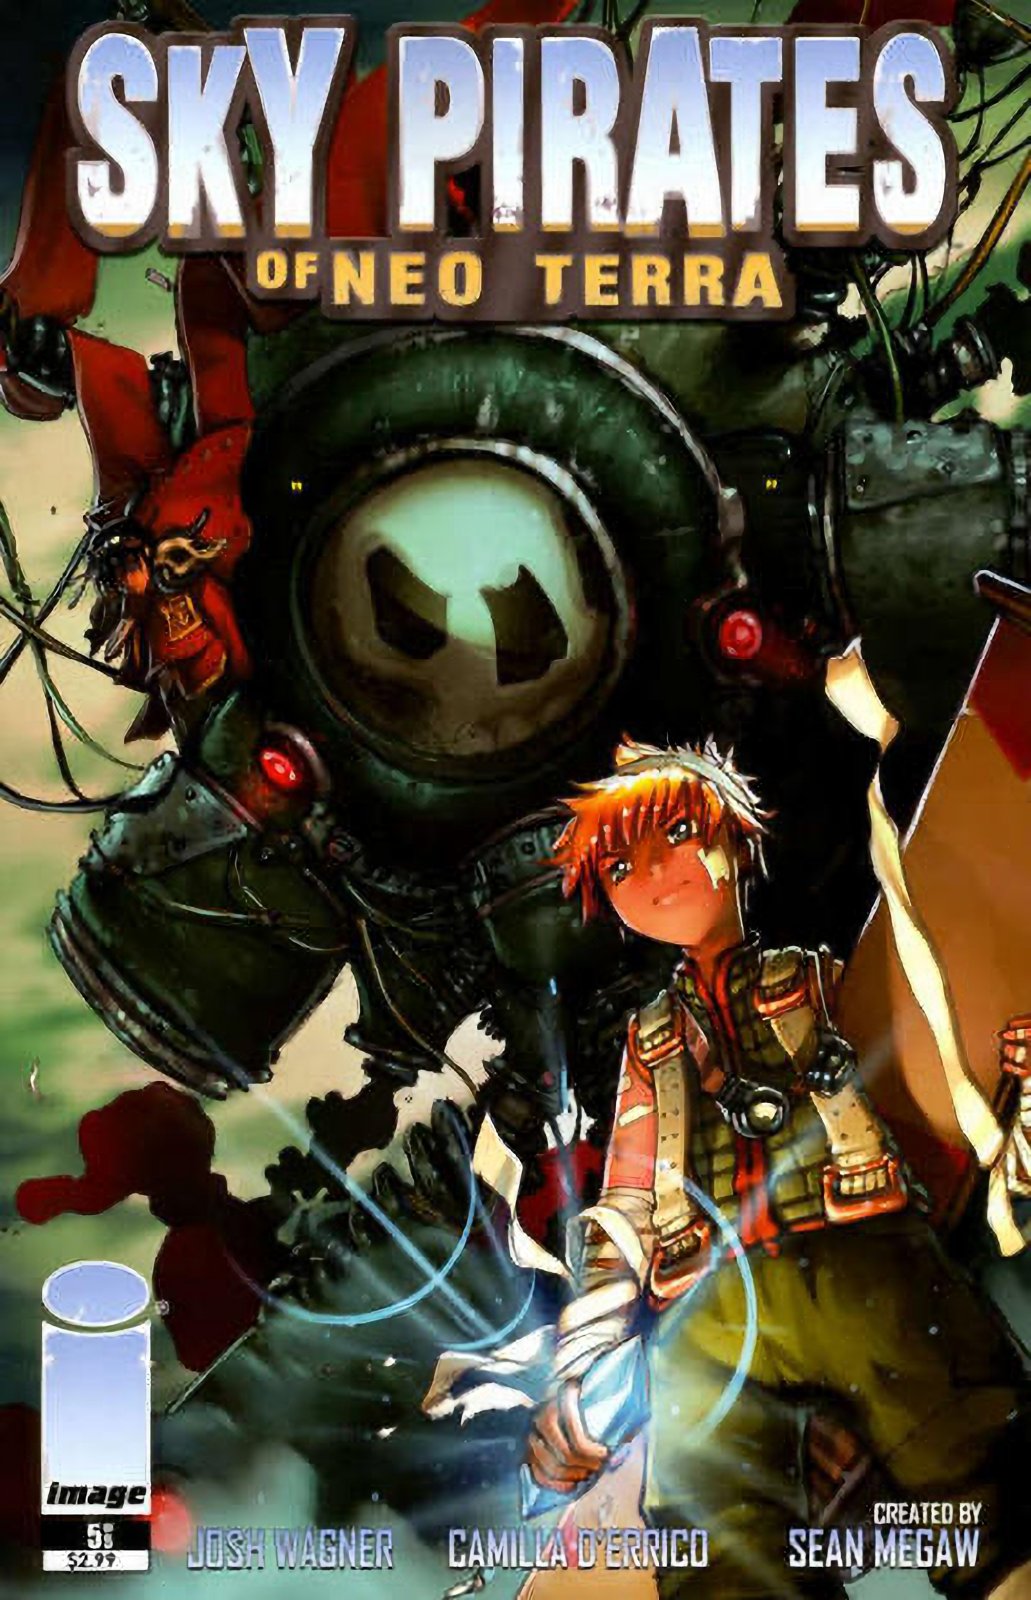 Sky Pirates of Neo Terra #5 (2009-2010) Image Comics